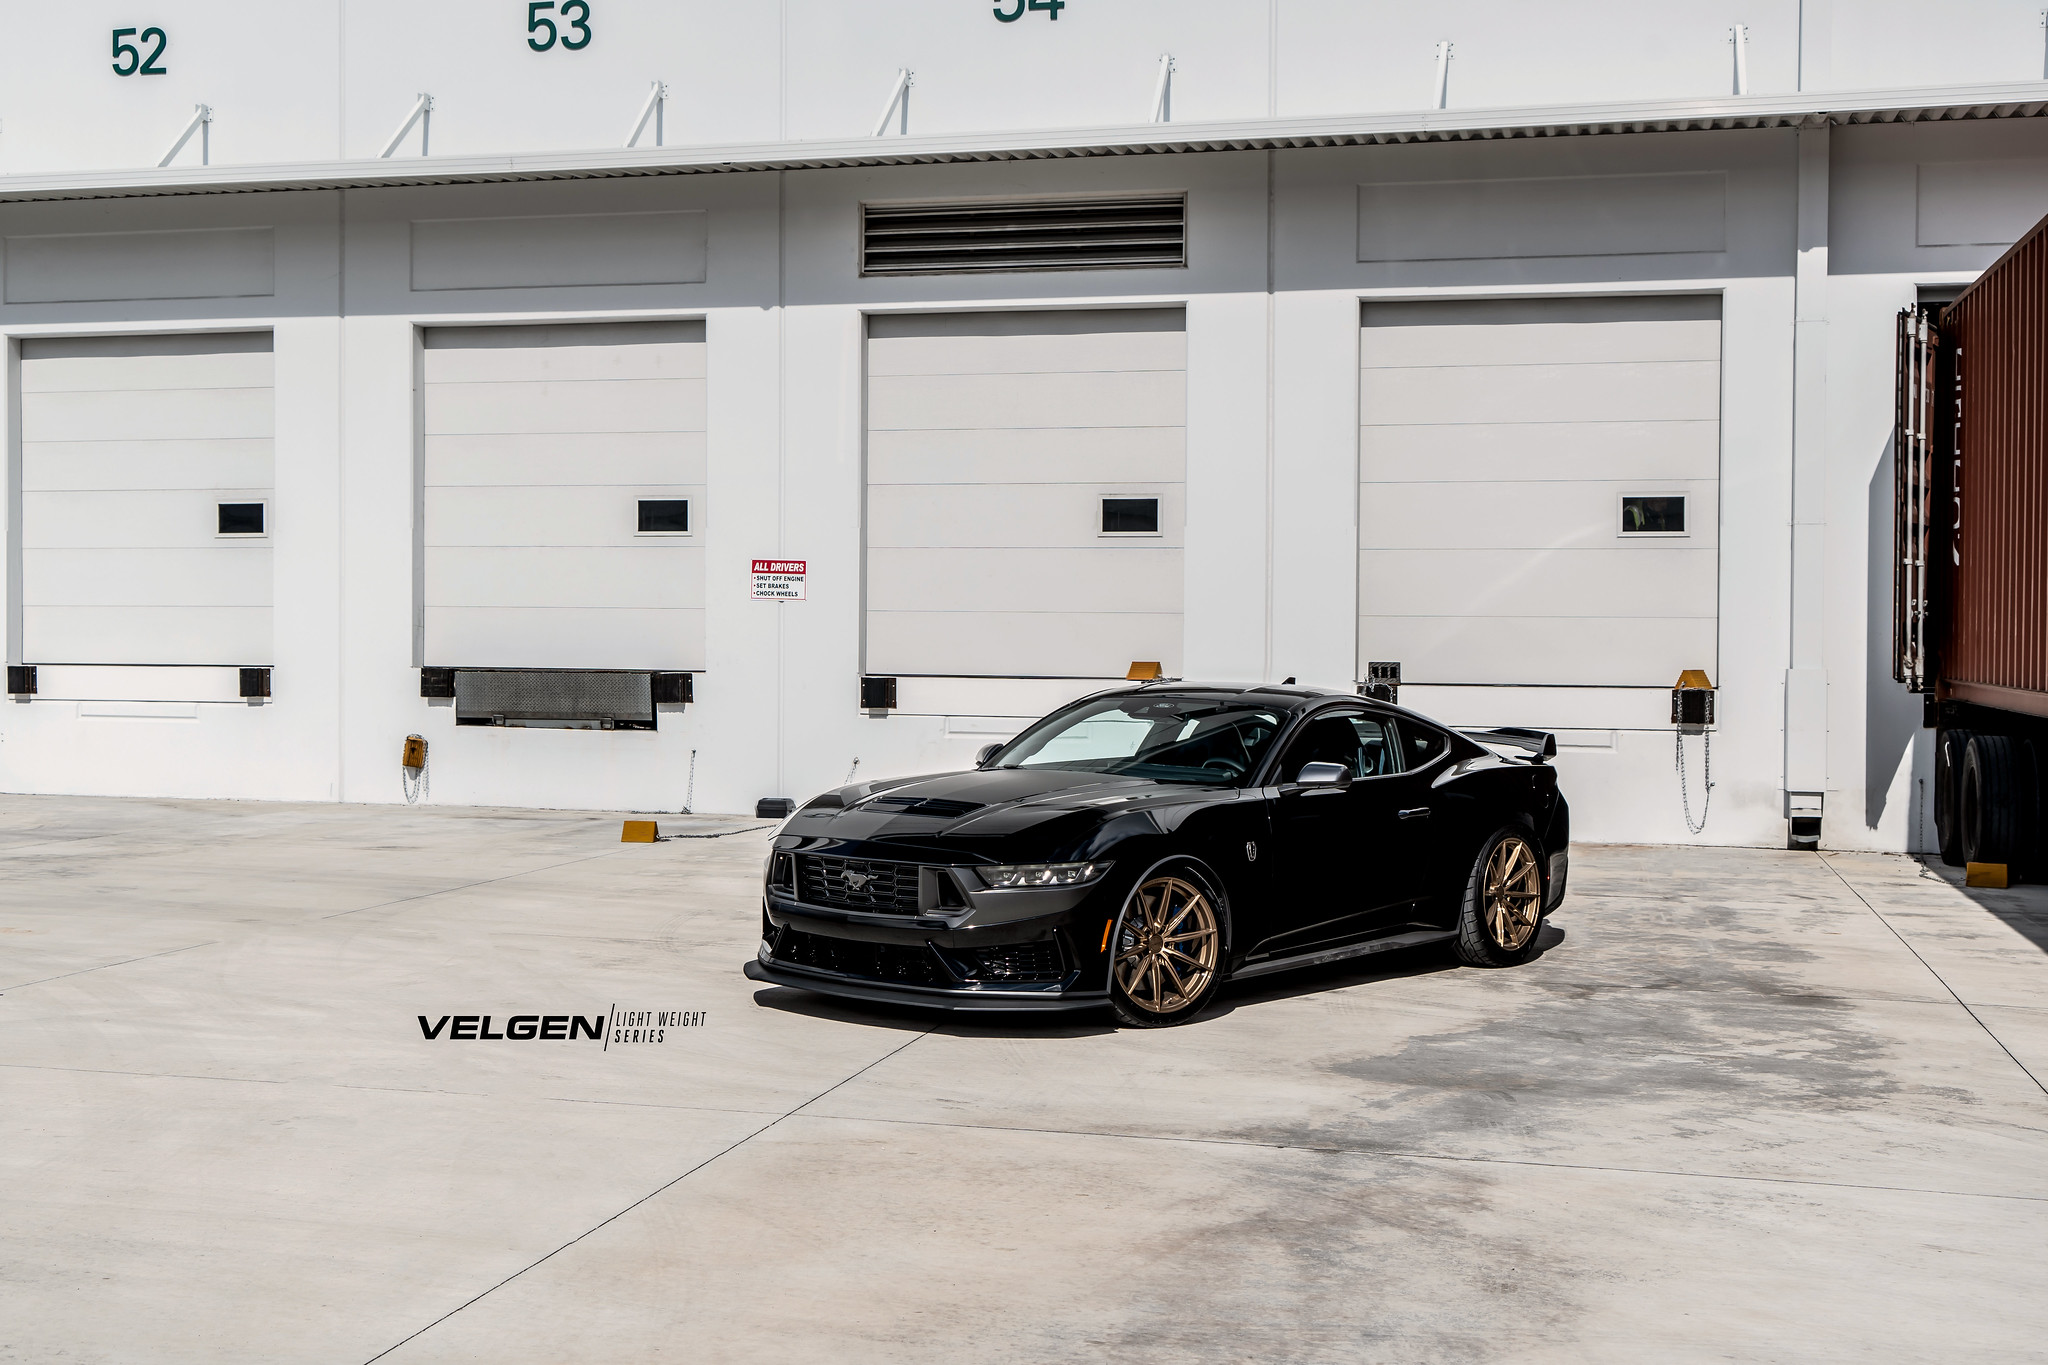 S650 Mustang Velgen wheels for your S650 Mustang | Vibe Motorsports 53455459236_0e2e4283a0_k